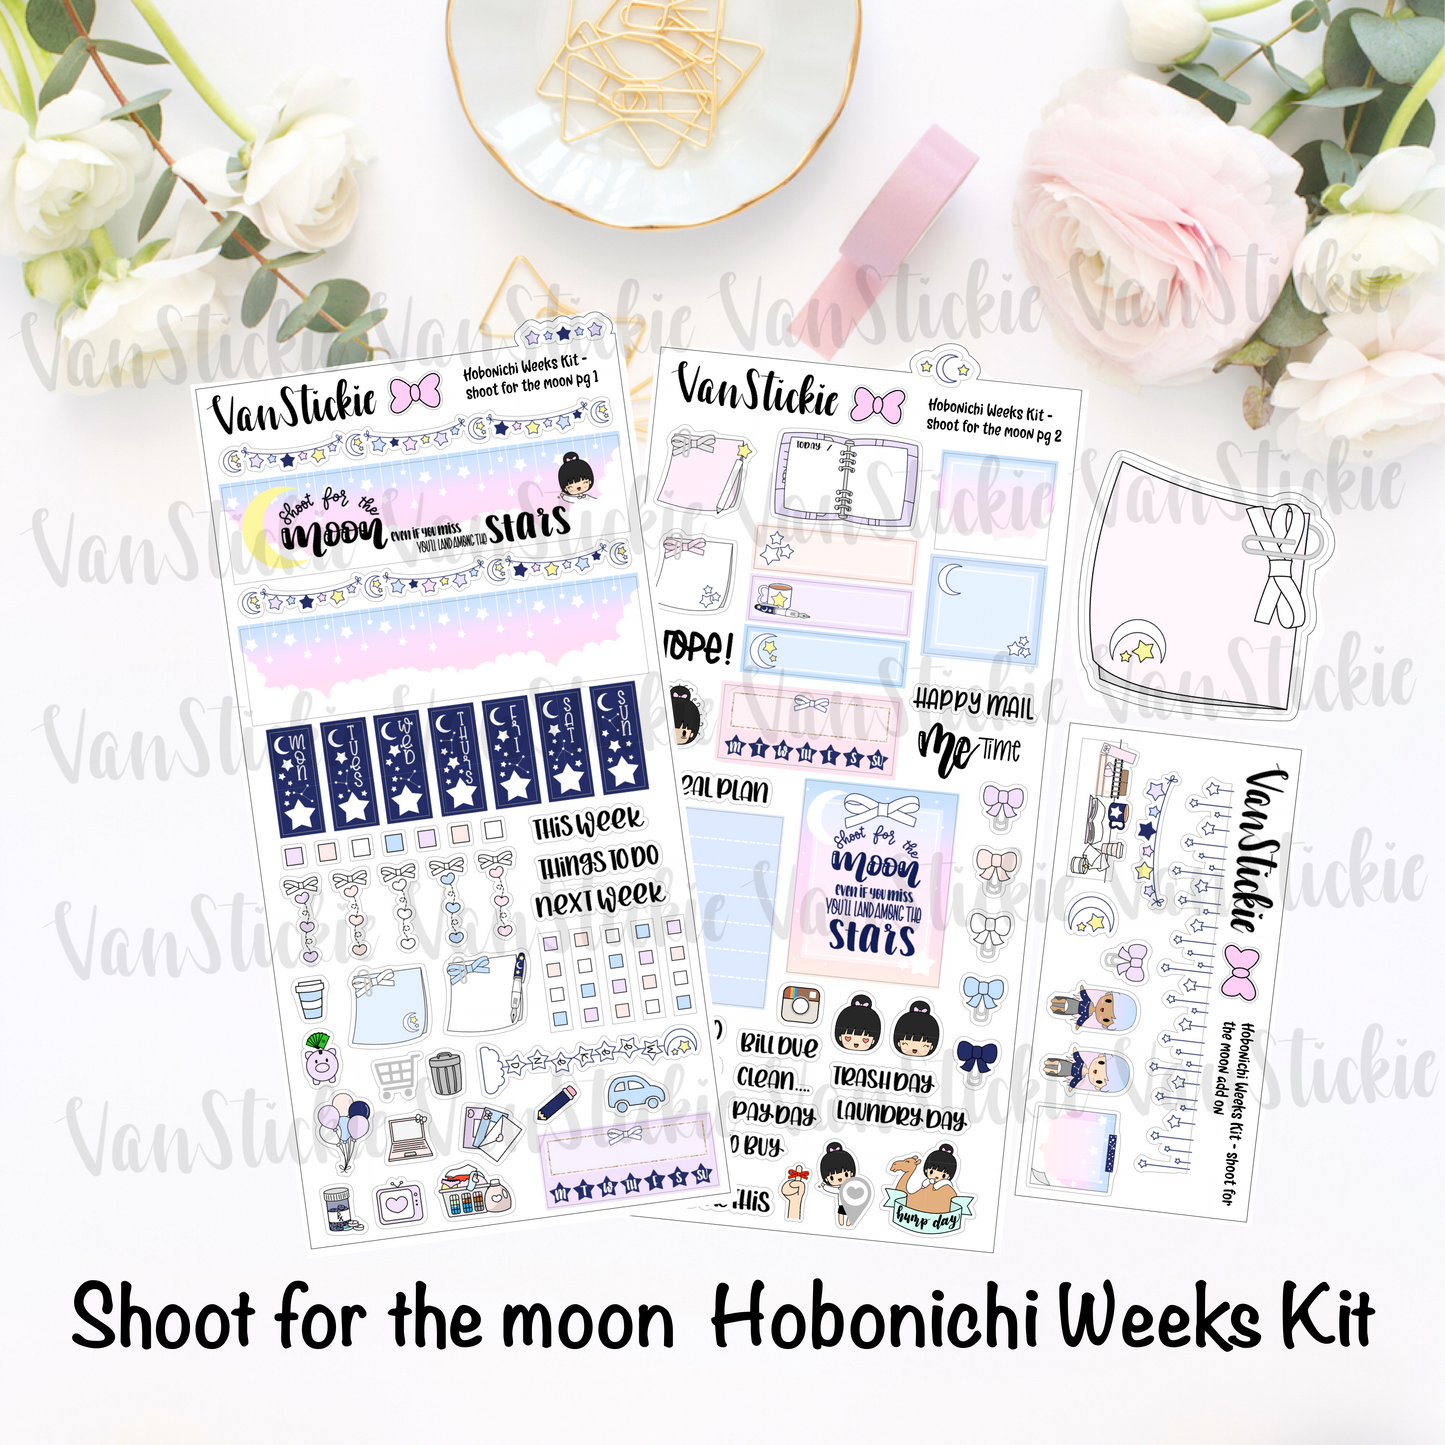 Hobonichi Weeks Kit - "Shoot for the Moon"